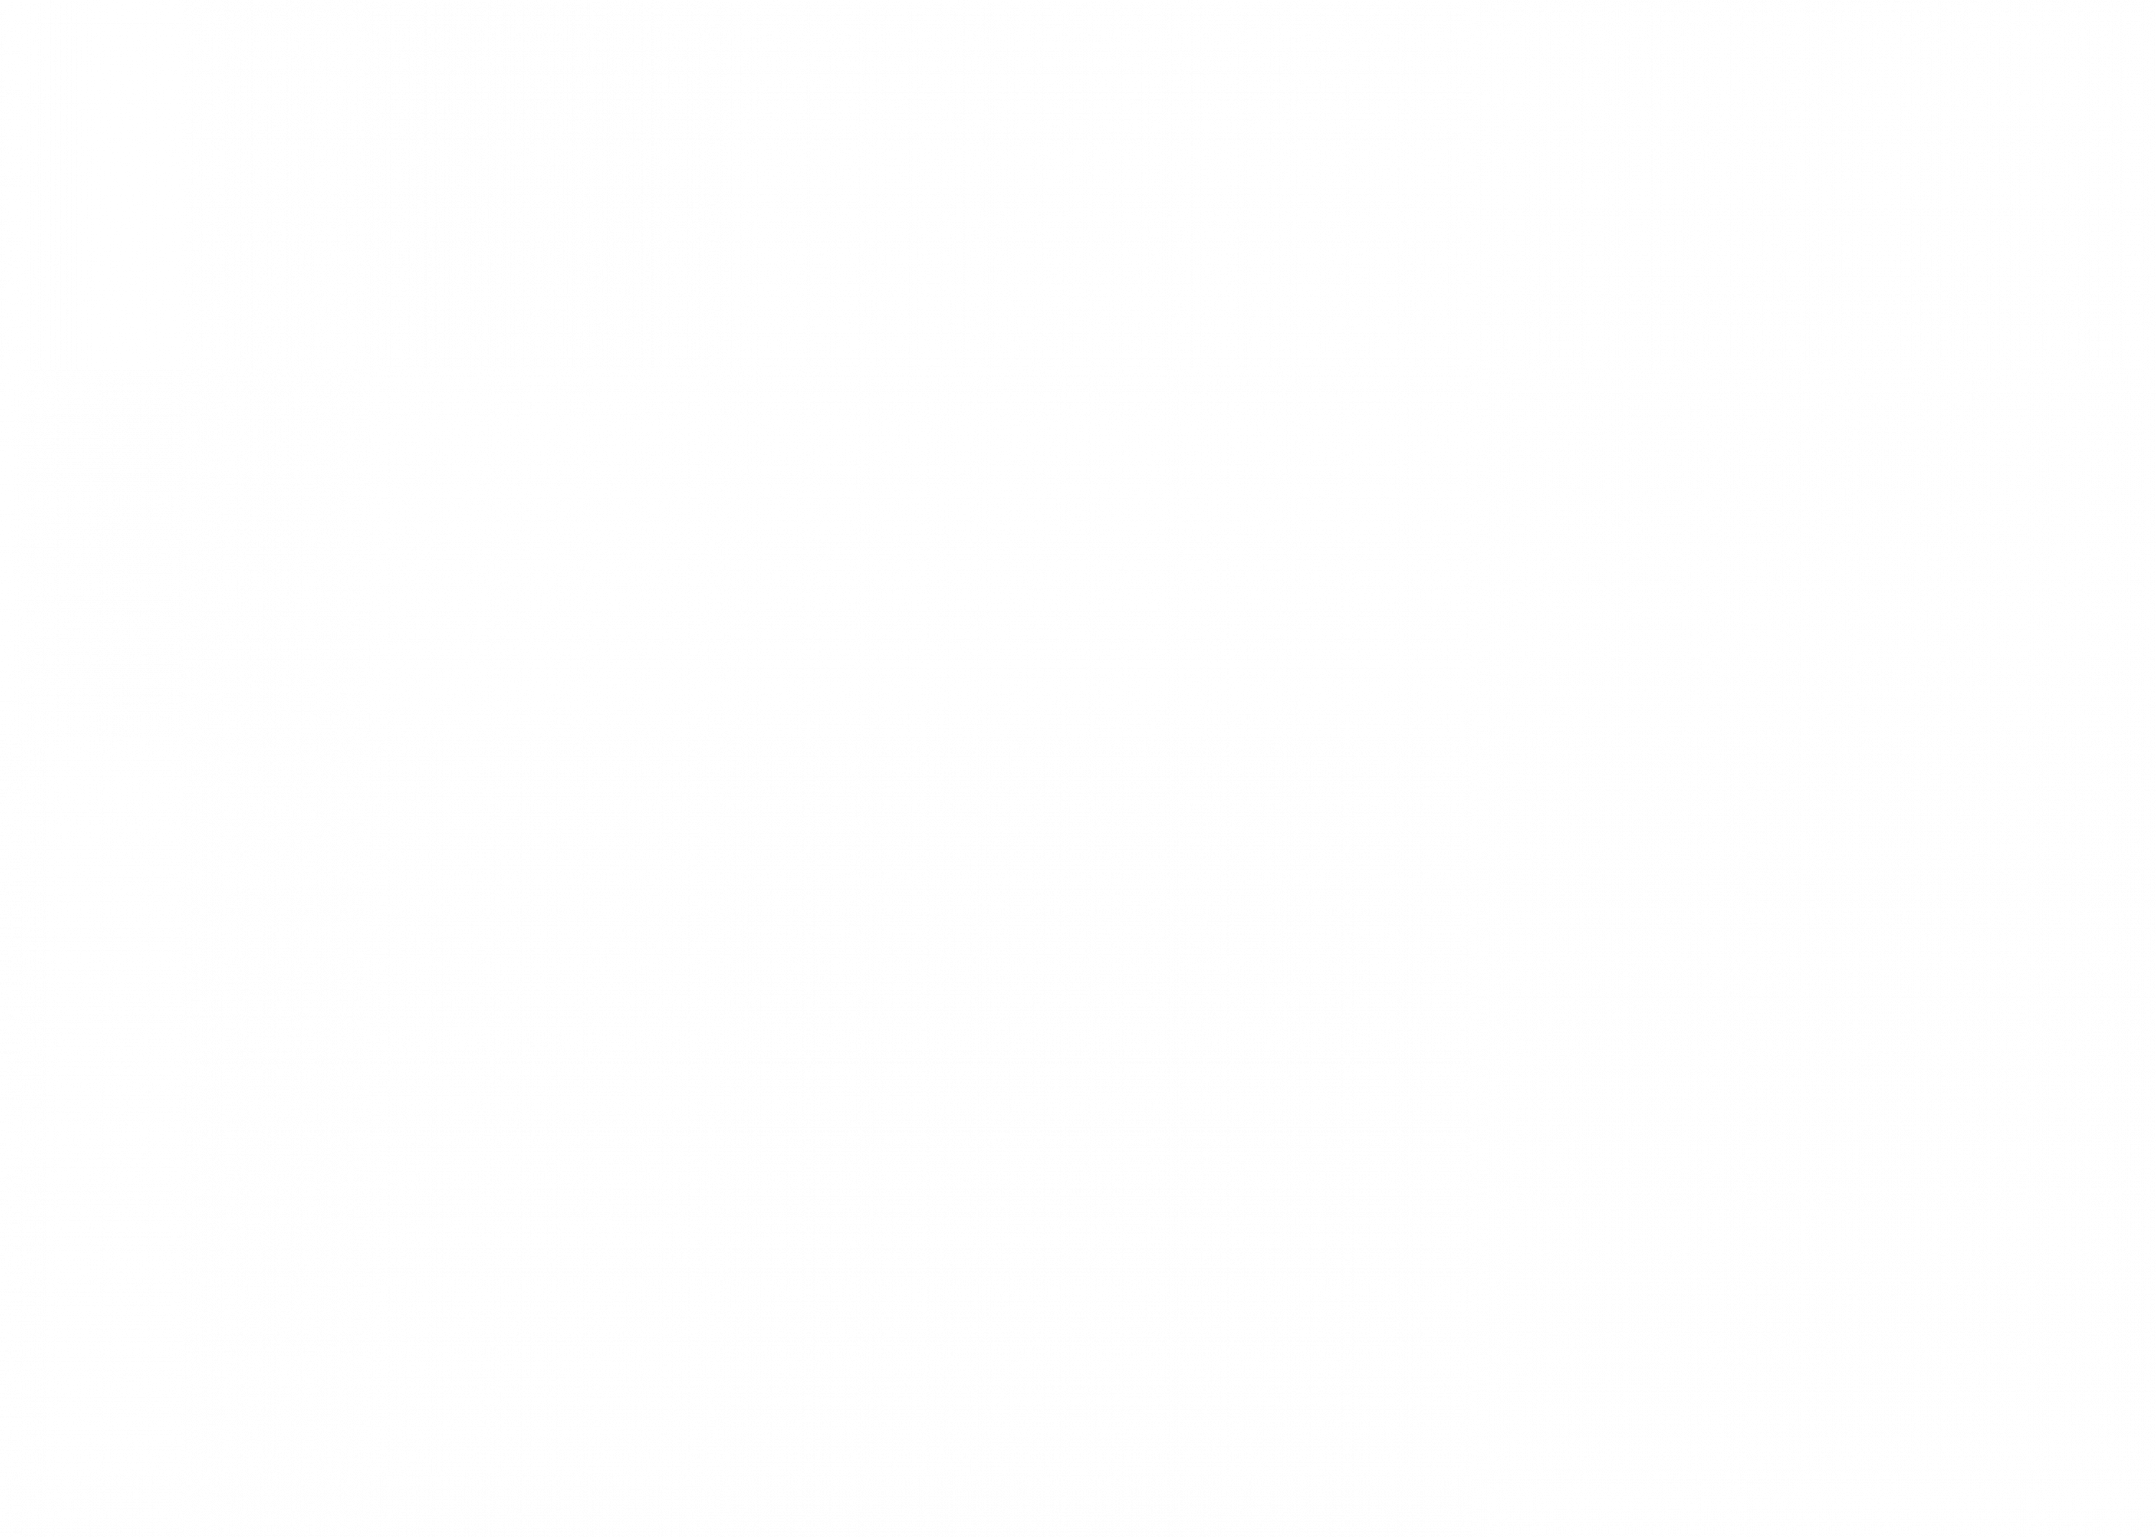 USSI Logo